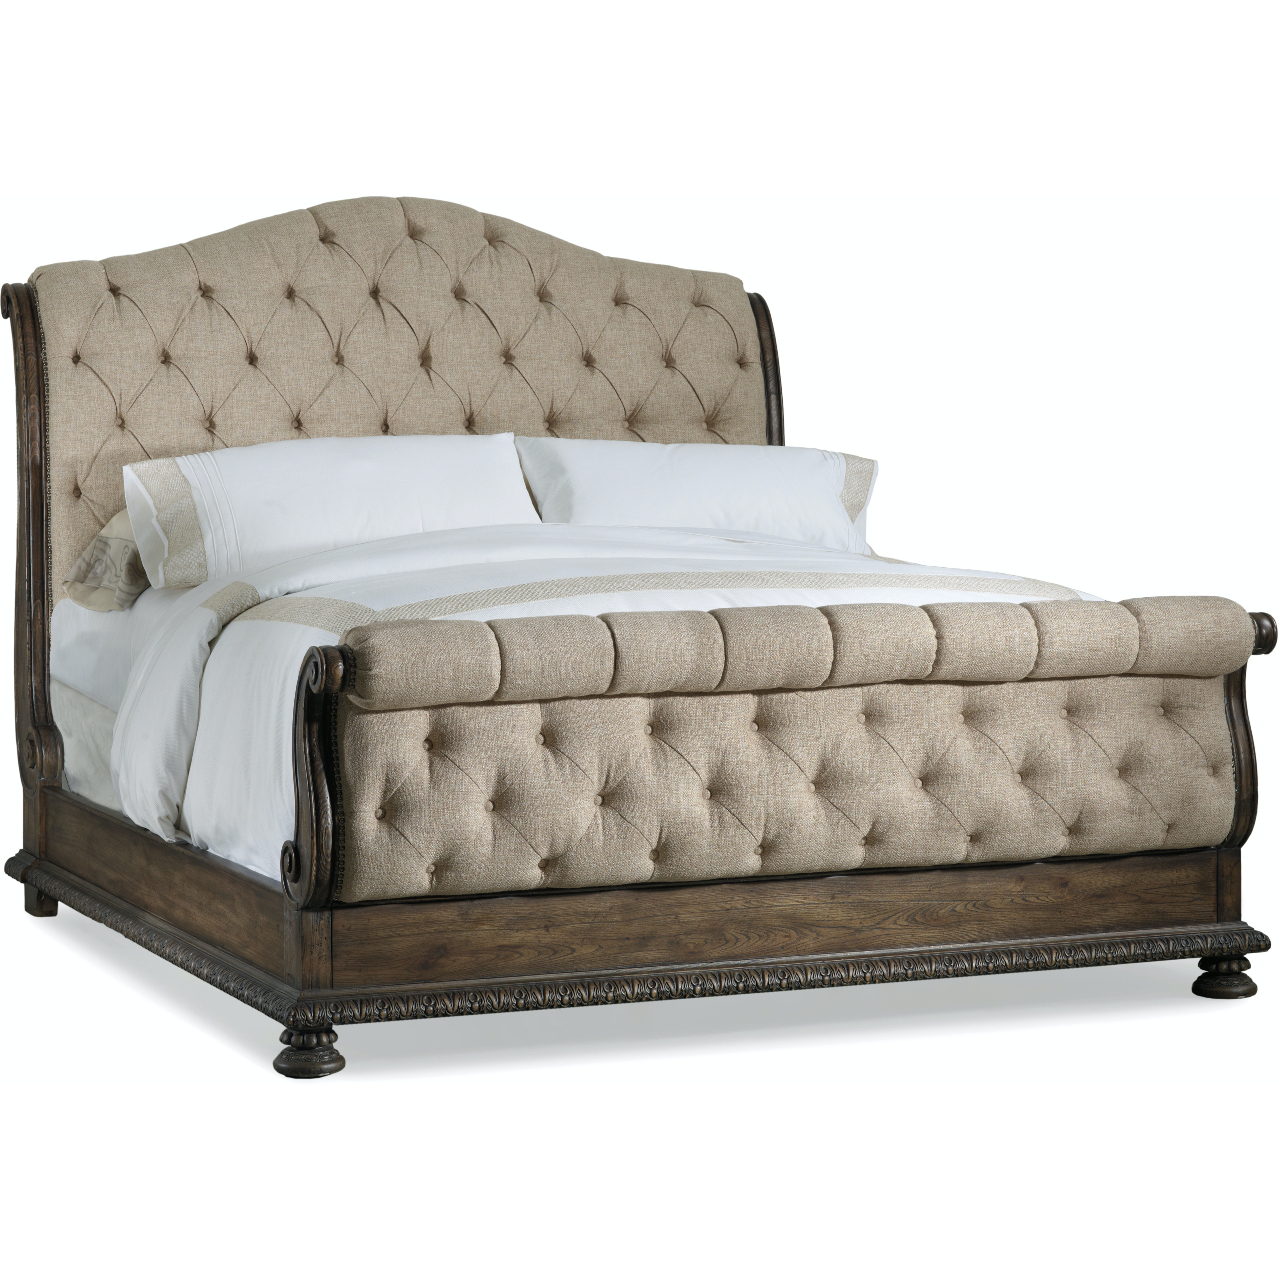 Кровать Rhapsody Queen Tufted Bed 5070-9055